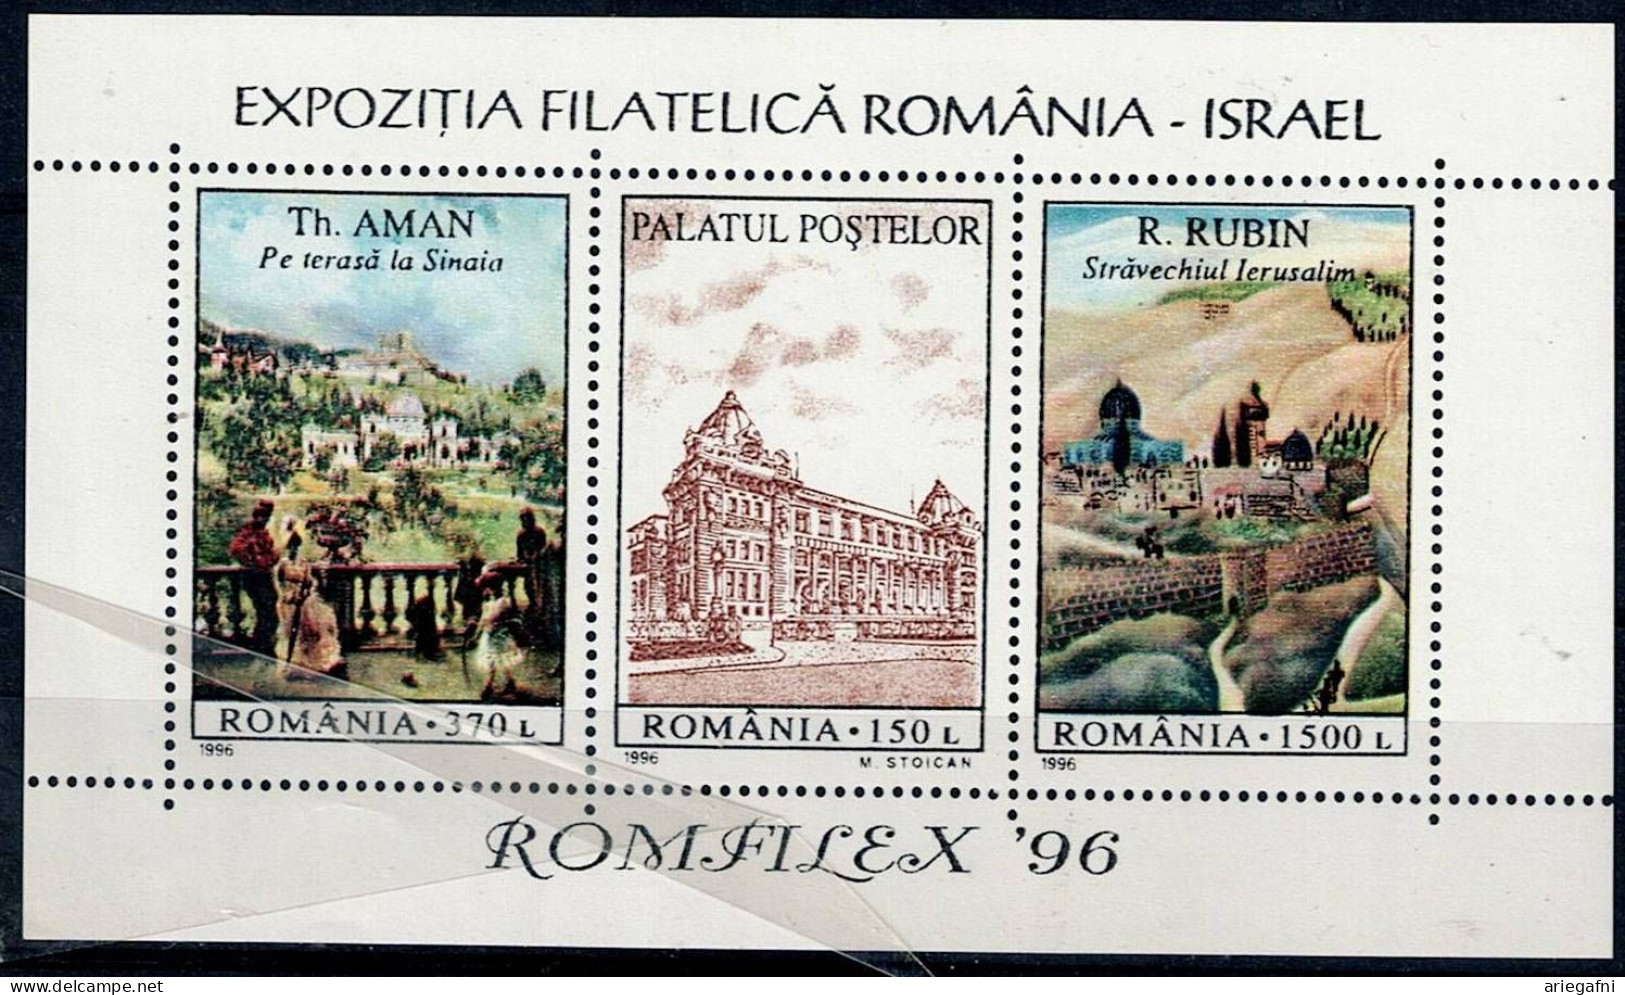 ROMANIA 1996 ROMANIAN-ISRAELI STAMP EXHIBITION PAINTING MI No BLOCK 298 MNH VF!! - Blocks & Sheetlets